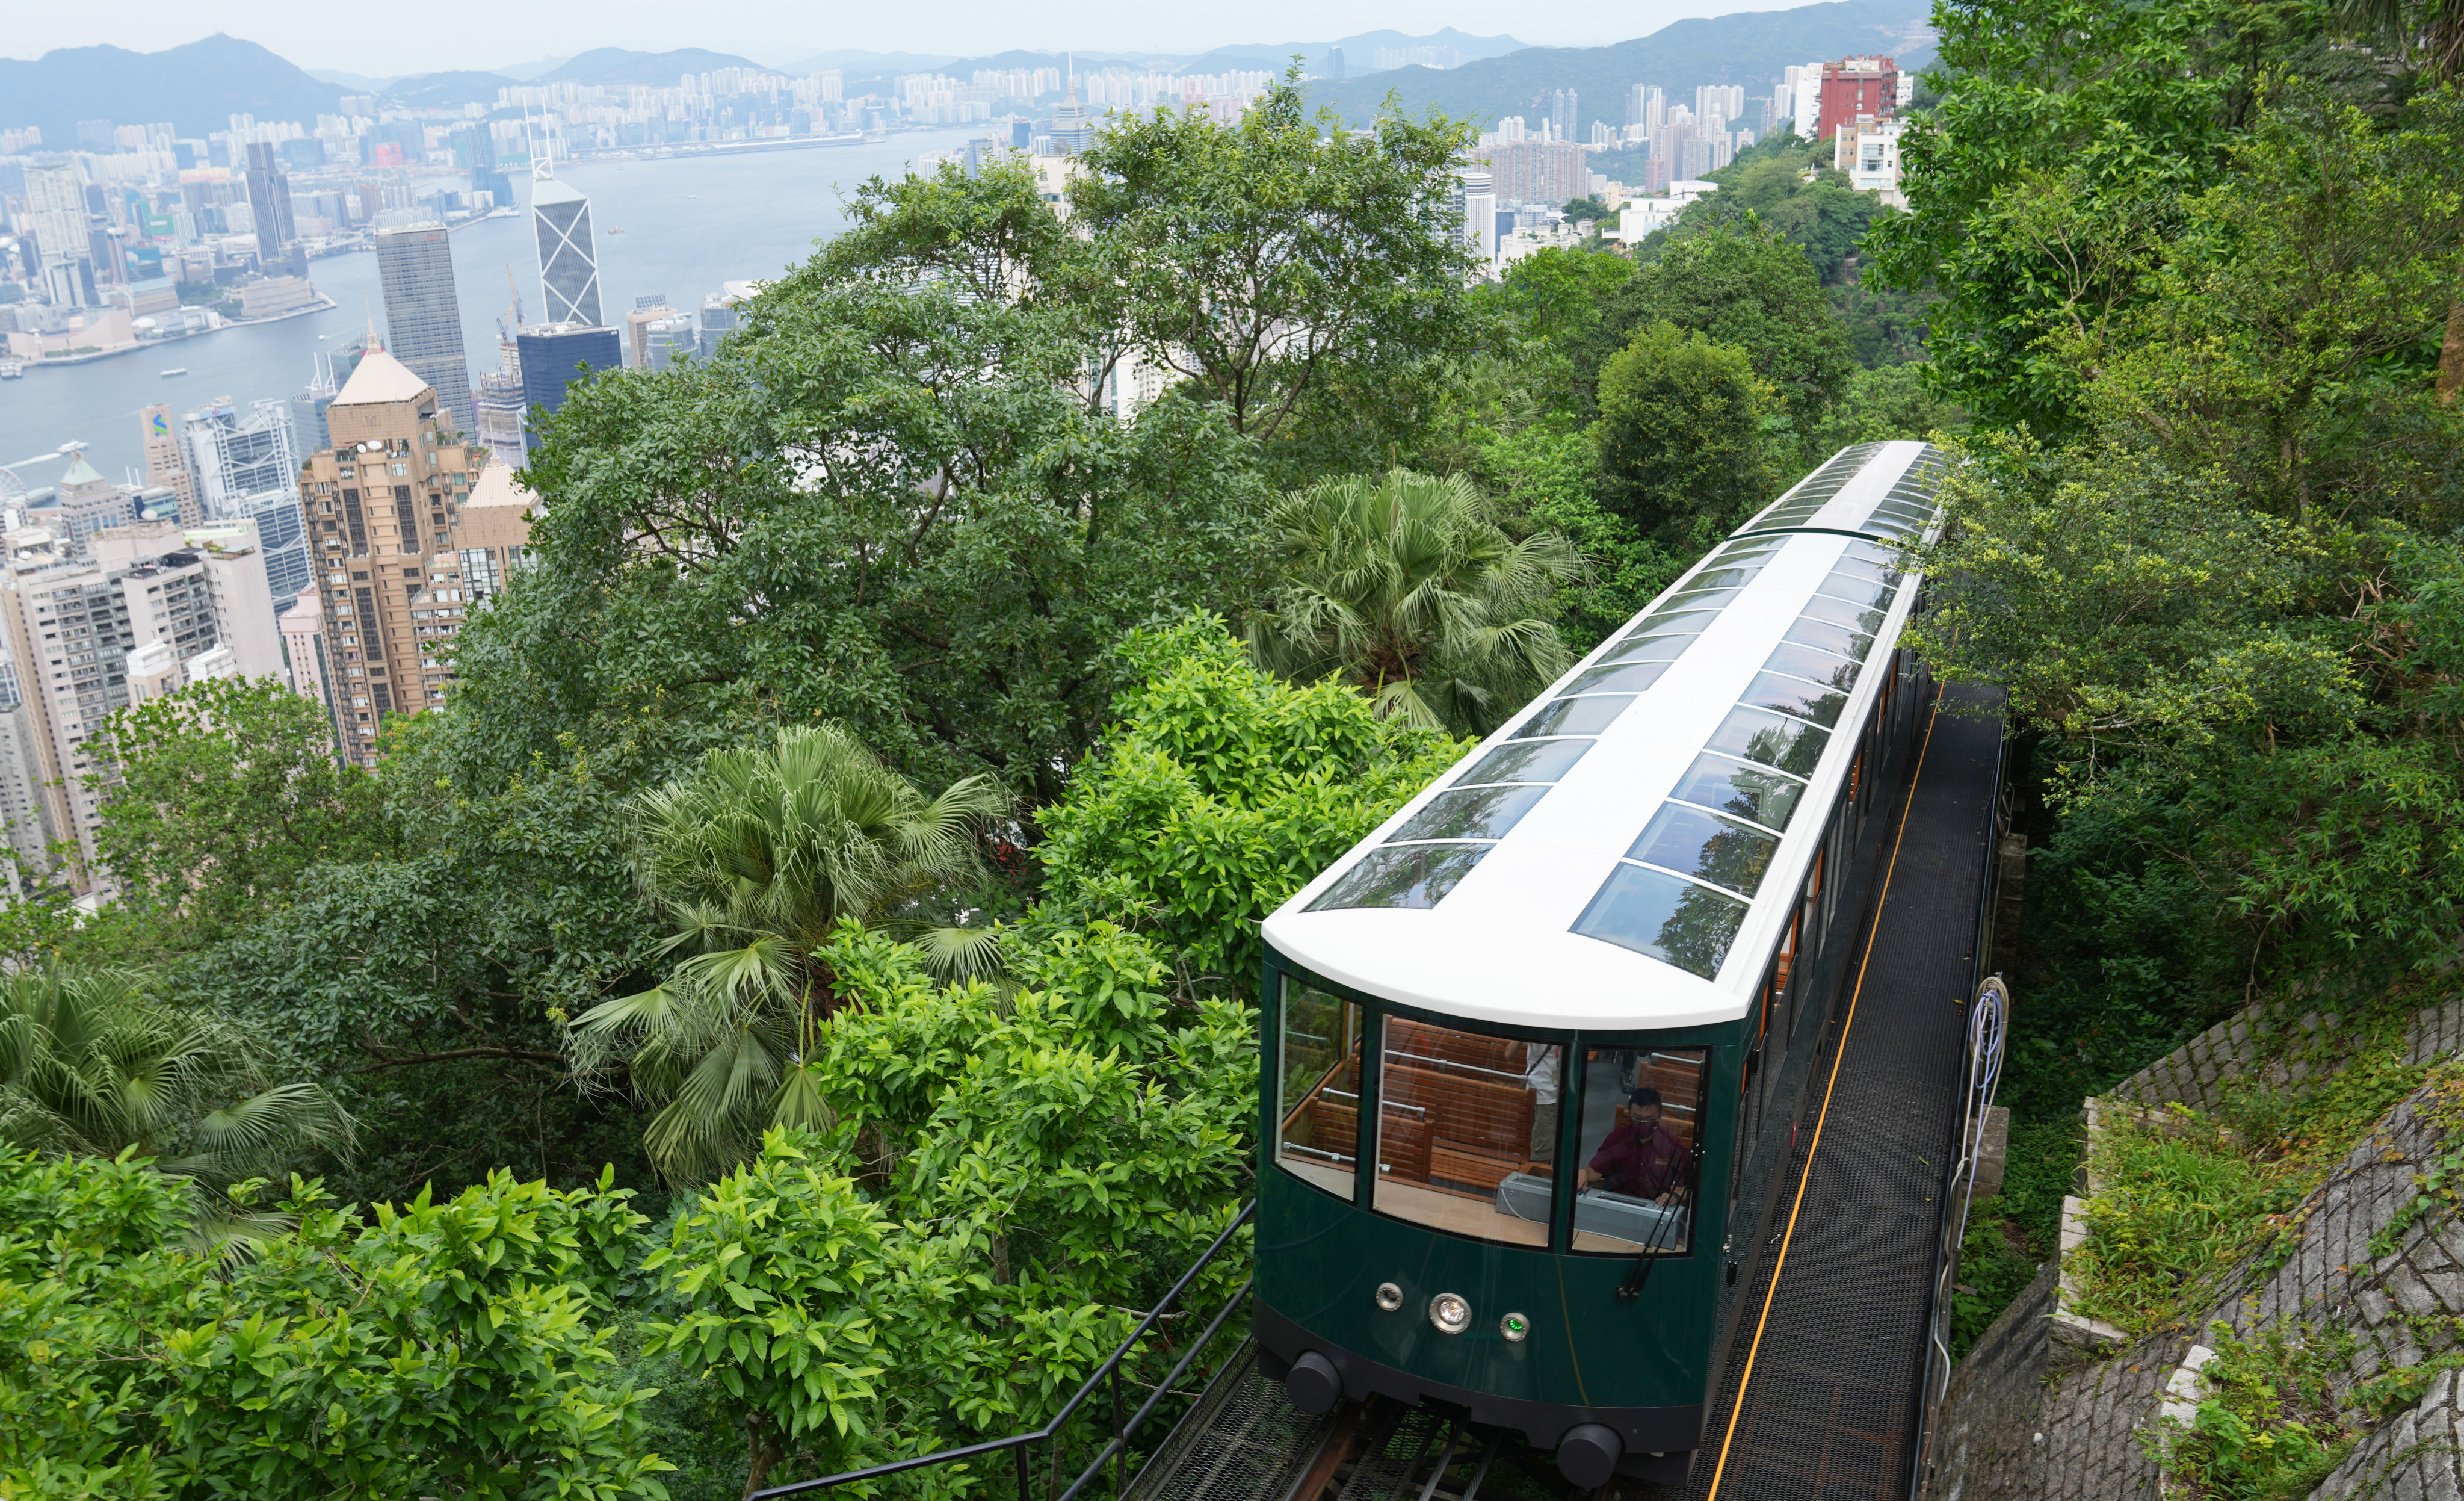 The sixth generation Peak Tram is set to make its long-awaited public debut on Saturday. Photo: Sam Tsang